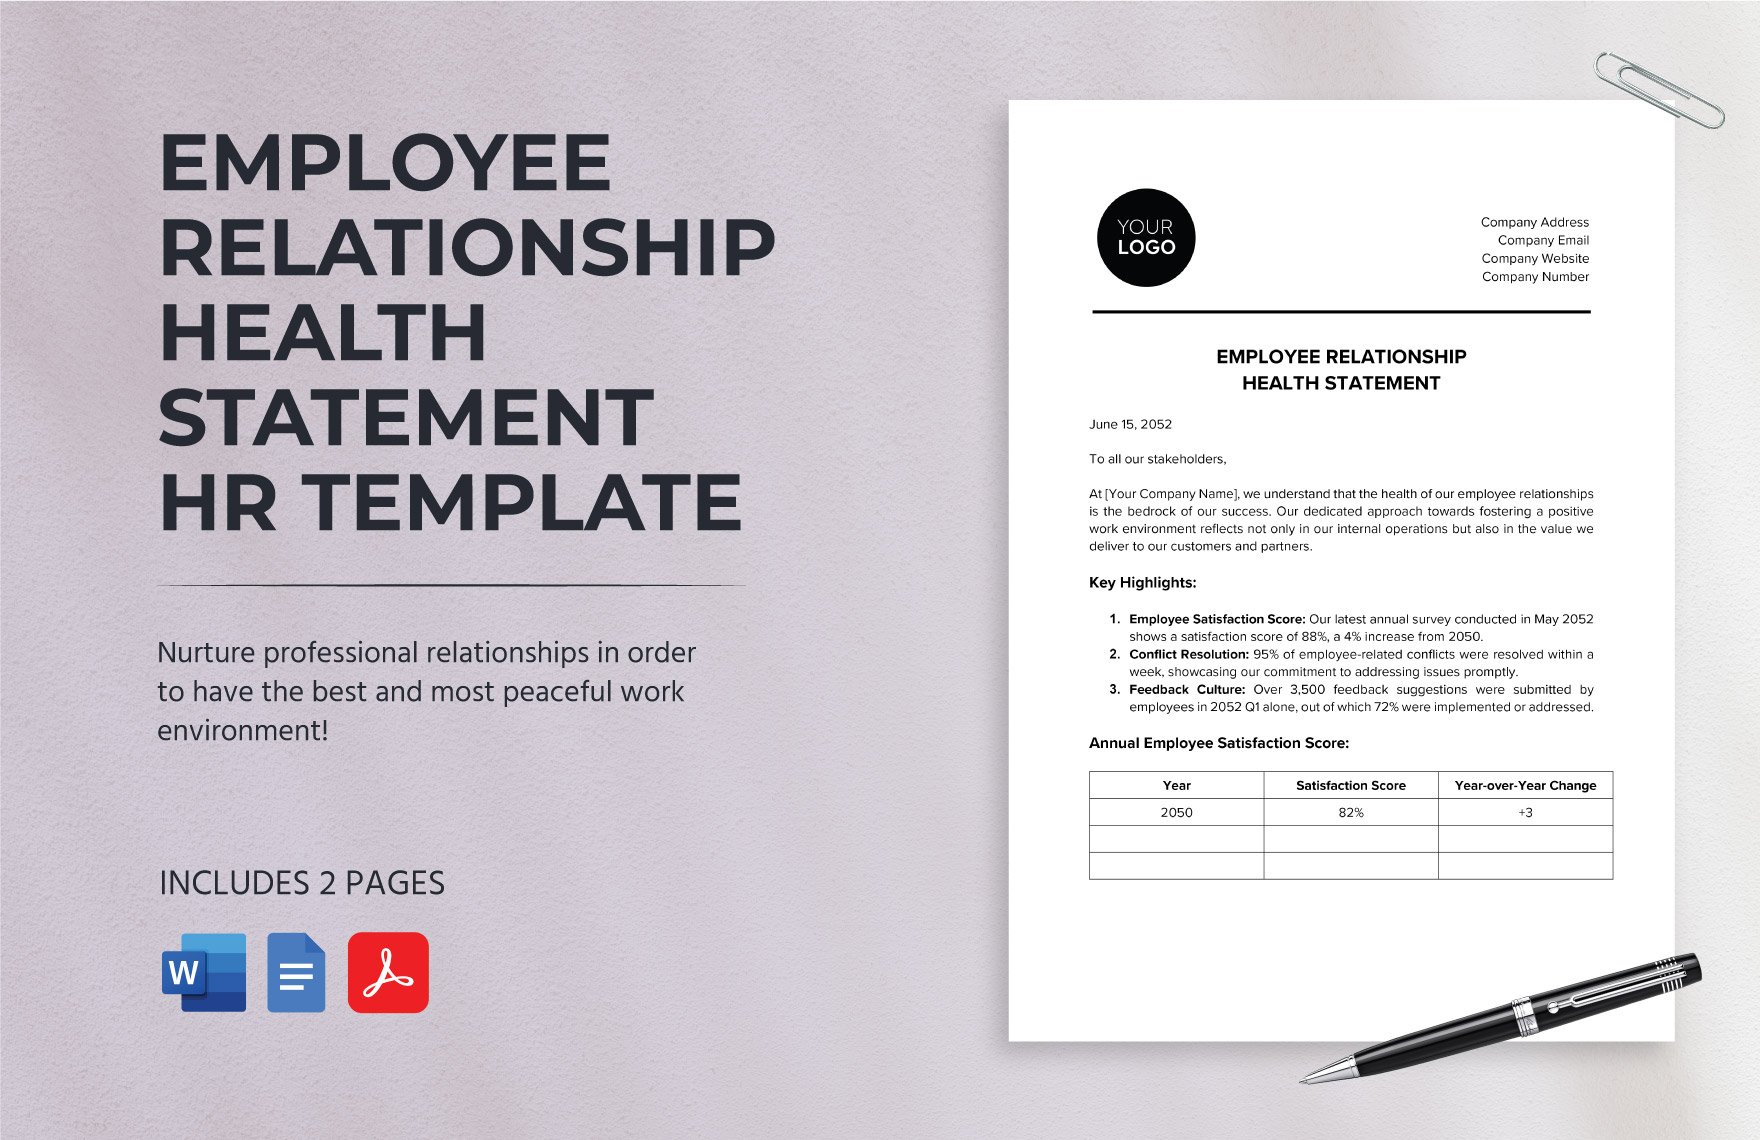 Employee Relationship Health Statement HR Template